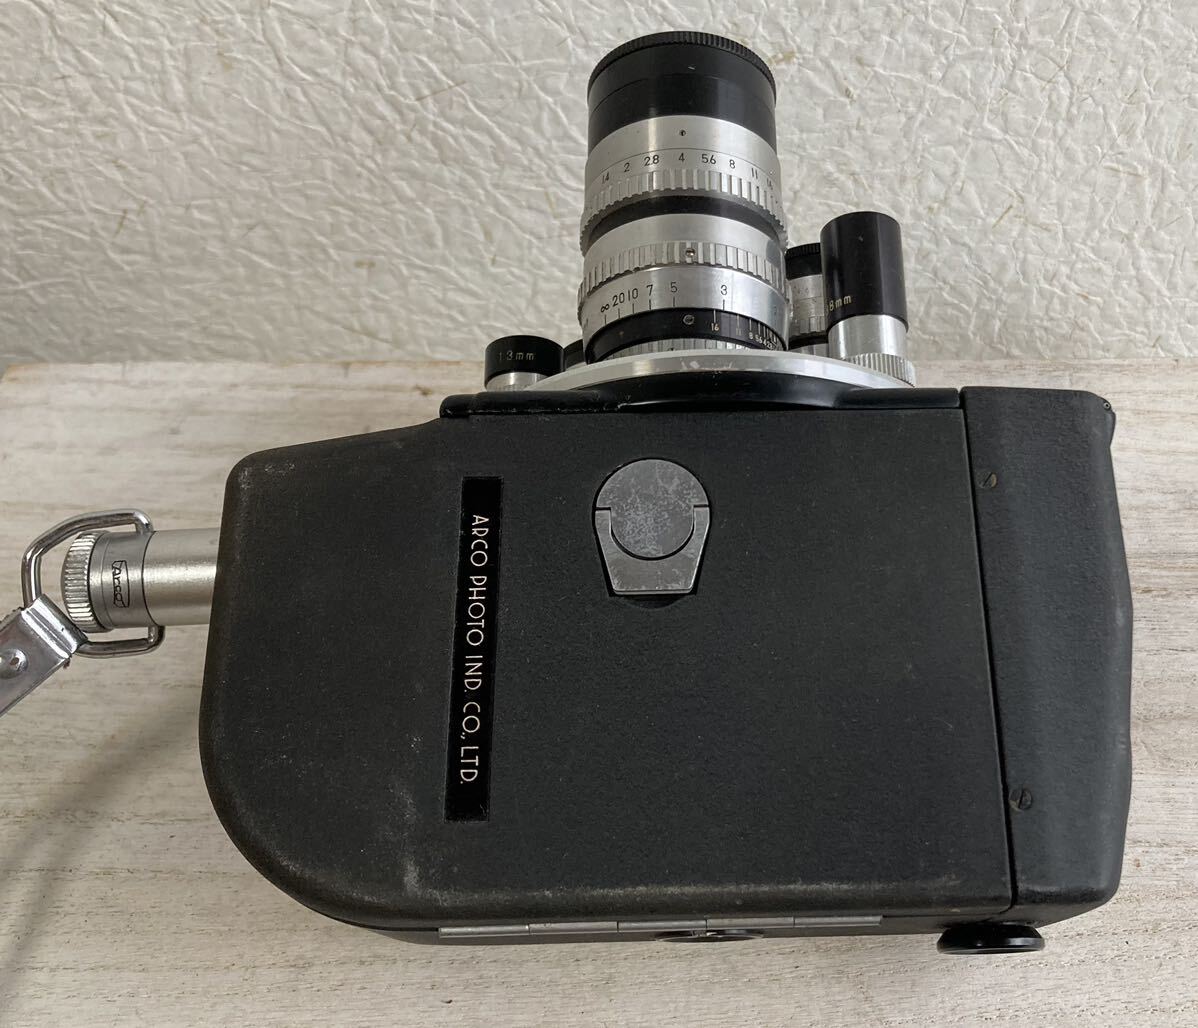 *arukoARCO PHOTO MODEL CR-8 8 millimeter camera film camera operation not yet verification Junk *